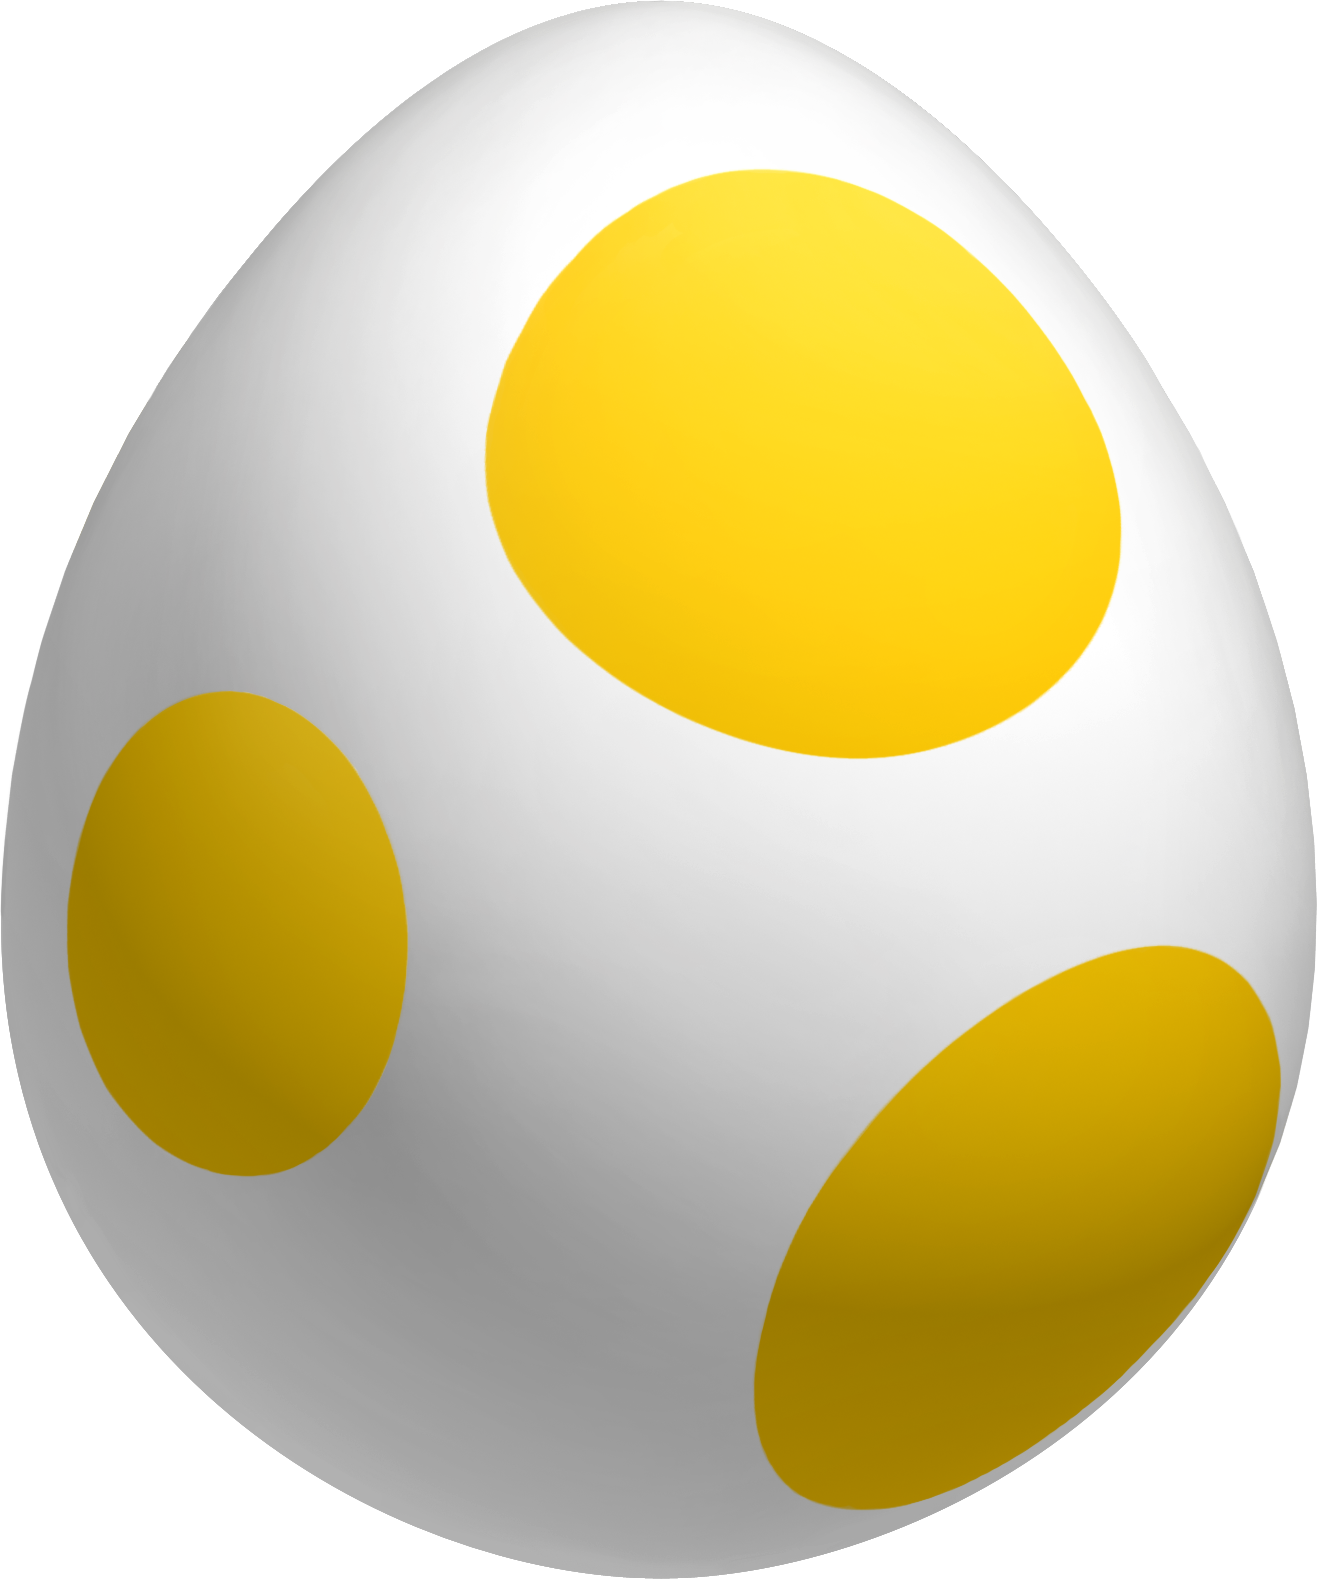 Yellow Yoshi egg